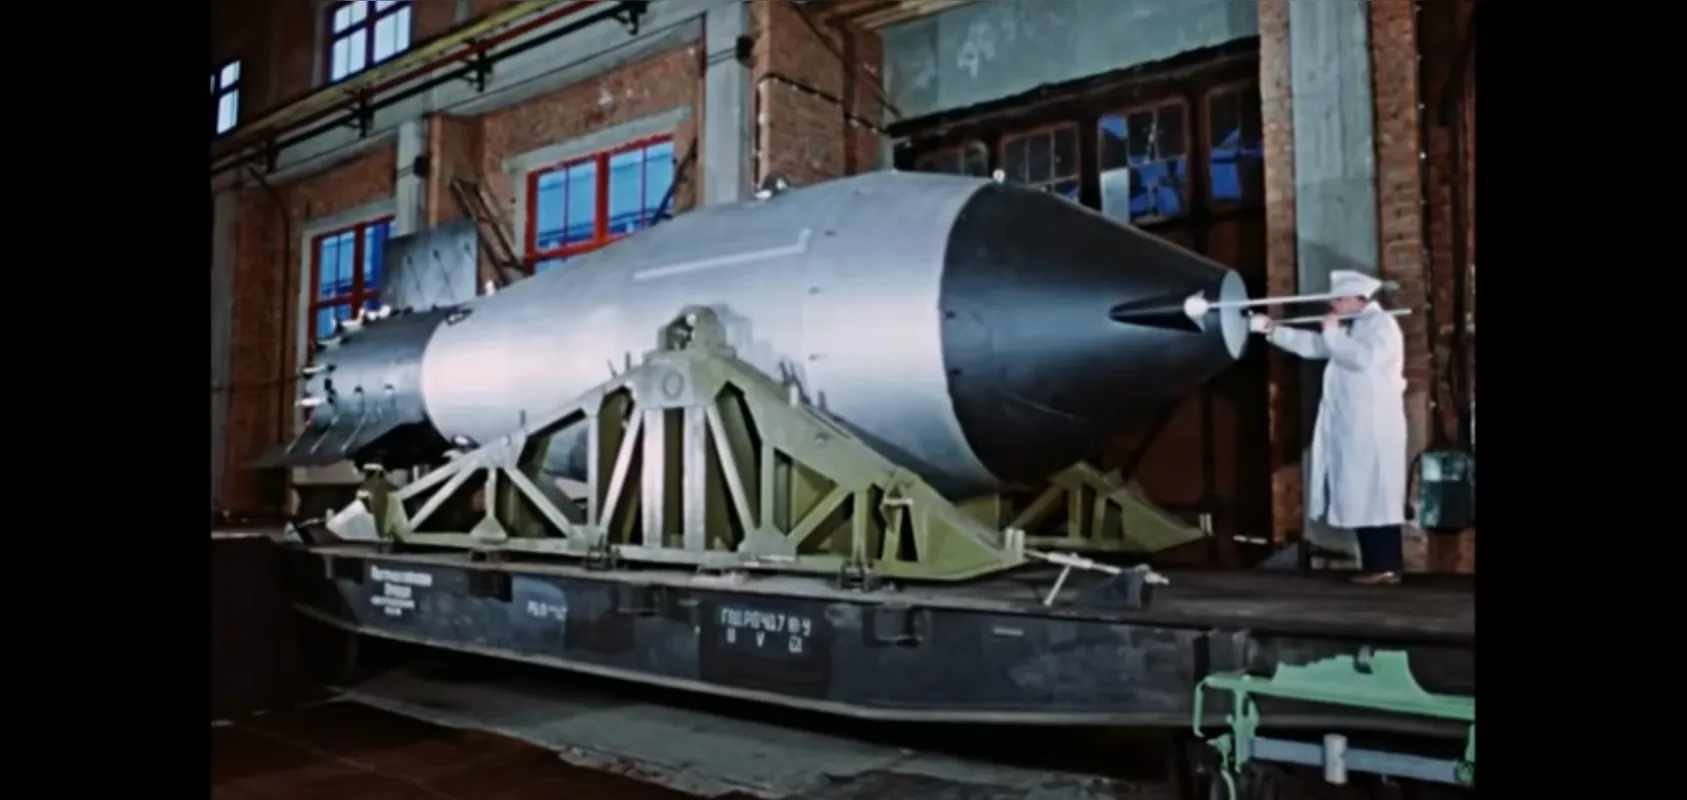 A “Tsar Bomba” pesava 27 toneladas, tinha 8 metros de altura e 2,6 metros de diâmetro